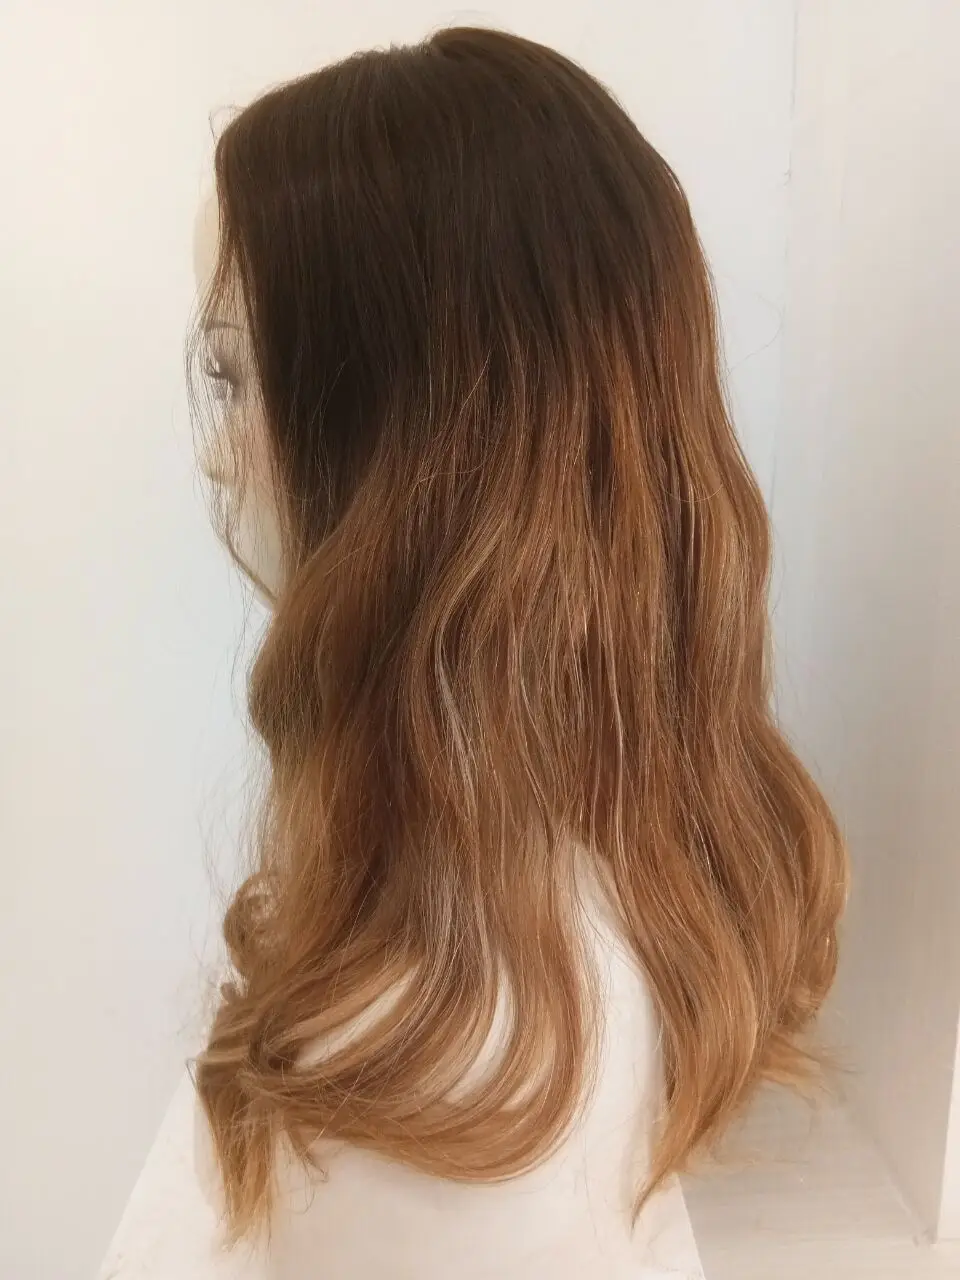 Tsingtaowigs изготовленные на заказ европейские натуральные волосы необработанные волосы еврейский парик Лучшие парики